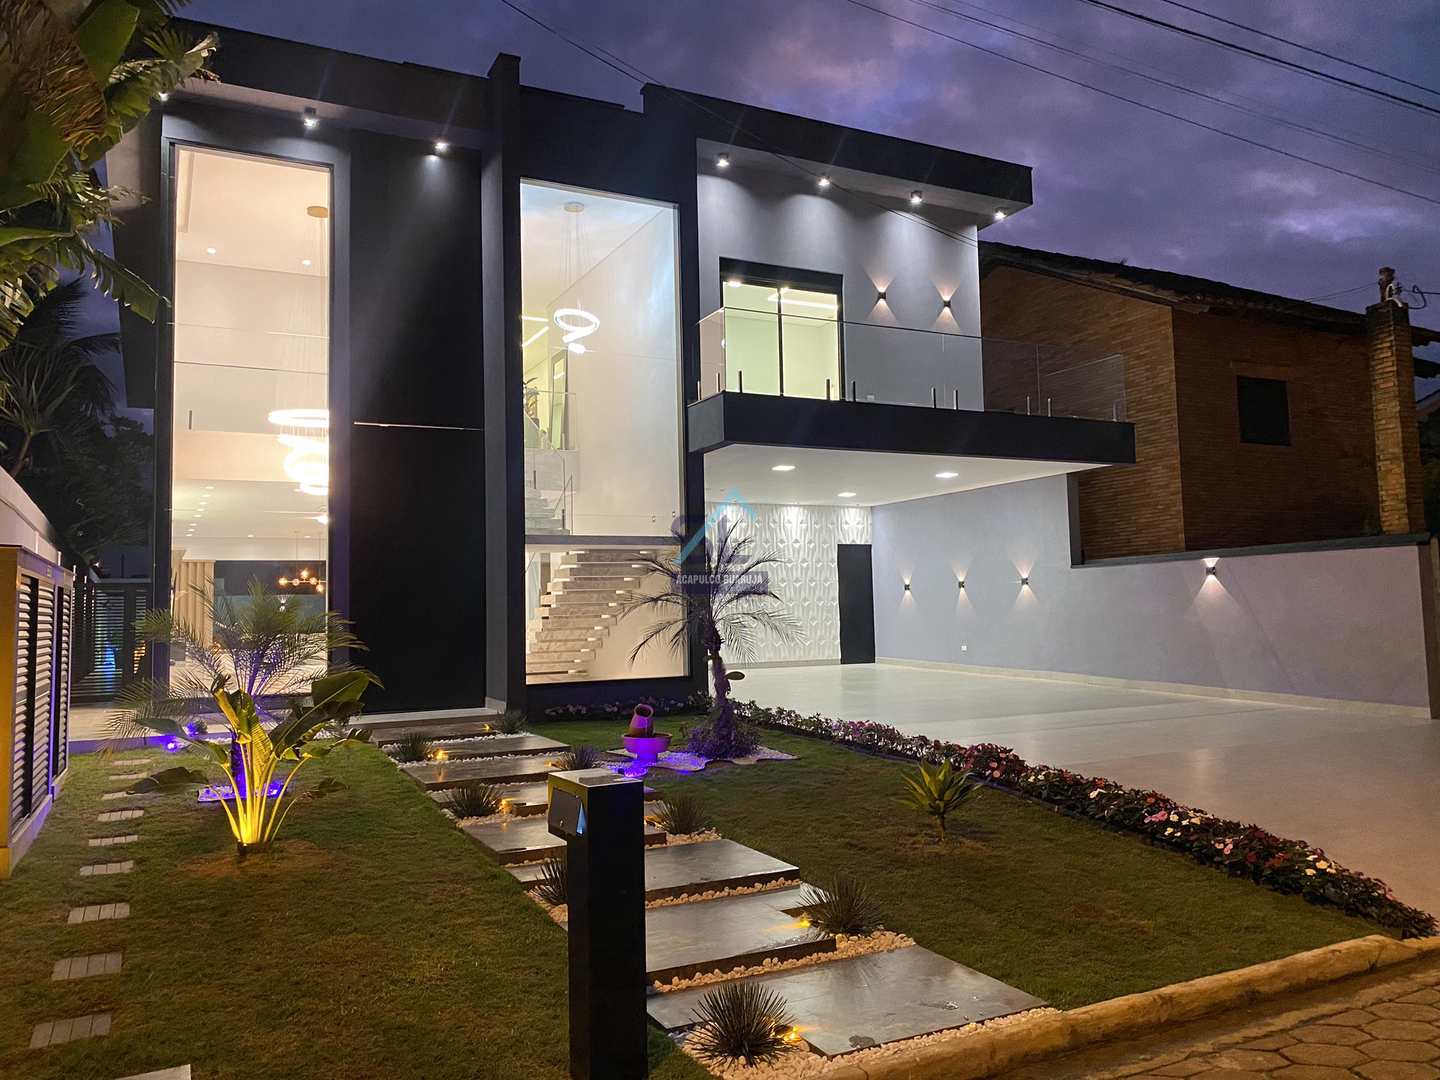 Casa de Condomínio com 6 dorms, Acapulco, Guarujá - R$ 5.6 mi, Cod: 170